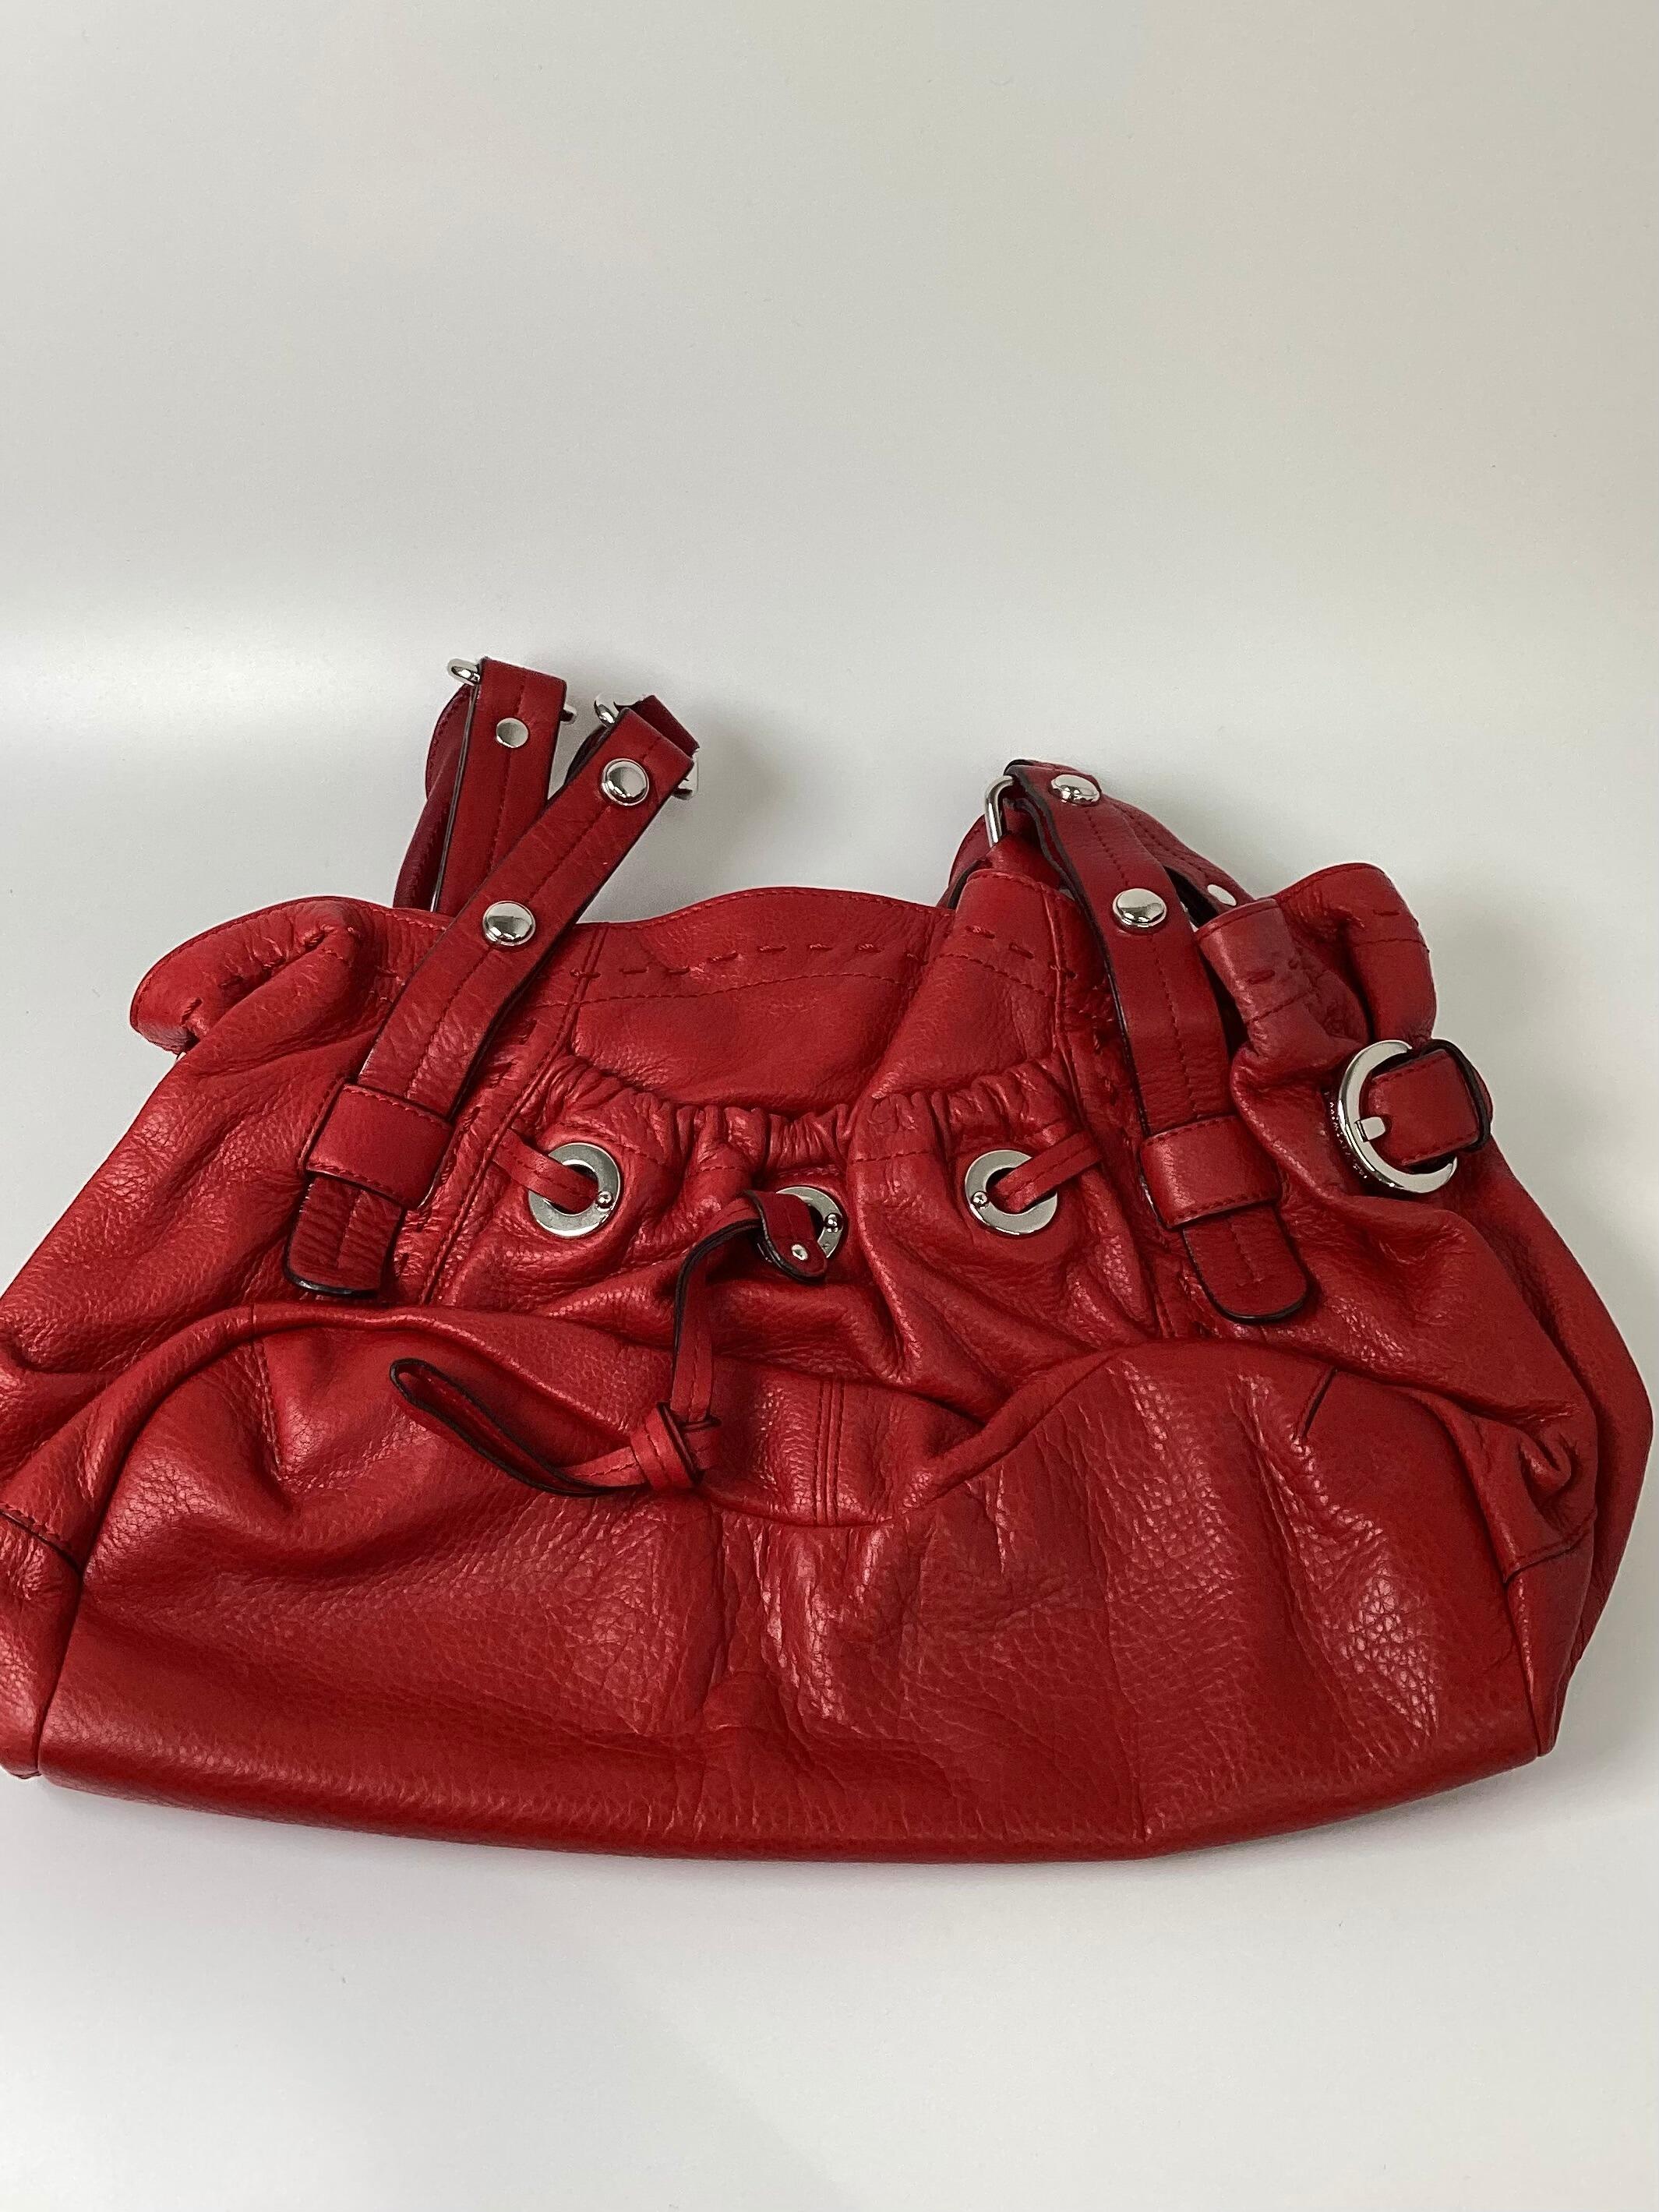 B. MAKOWSKY Purse Metallic Copper Leather Hobo Shoulder Bag Handbag Purse  A98252 | eBay